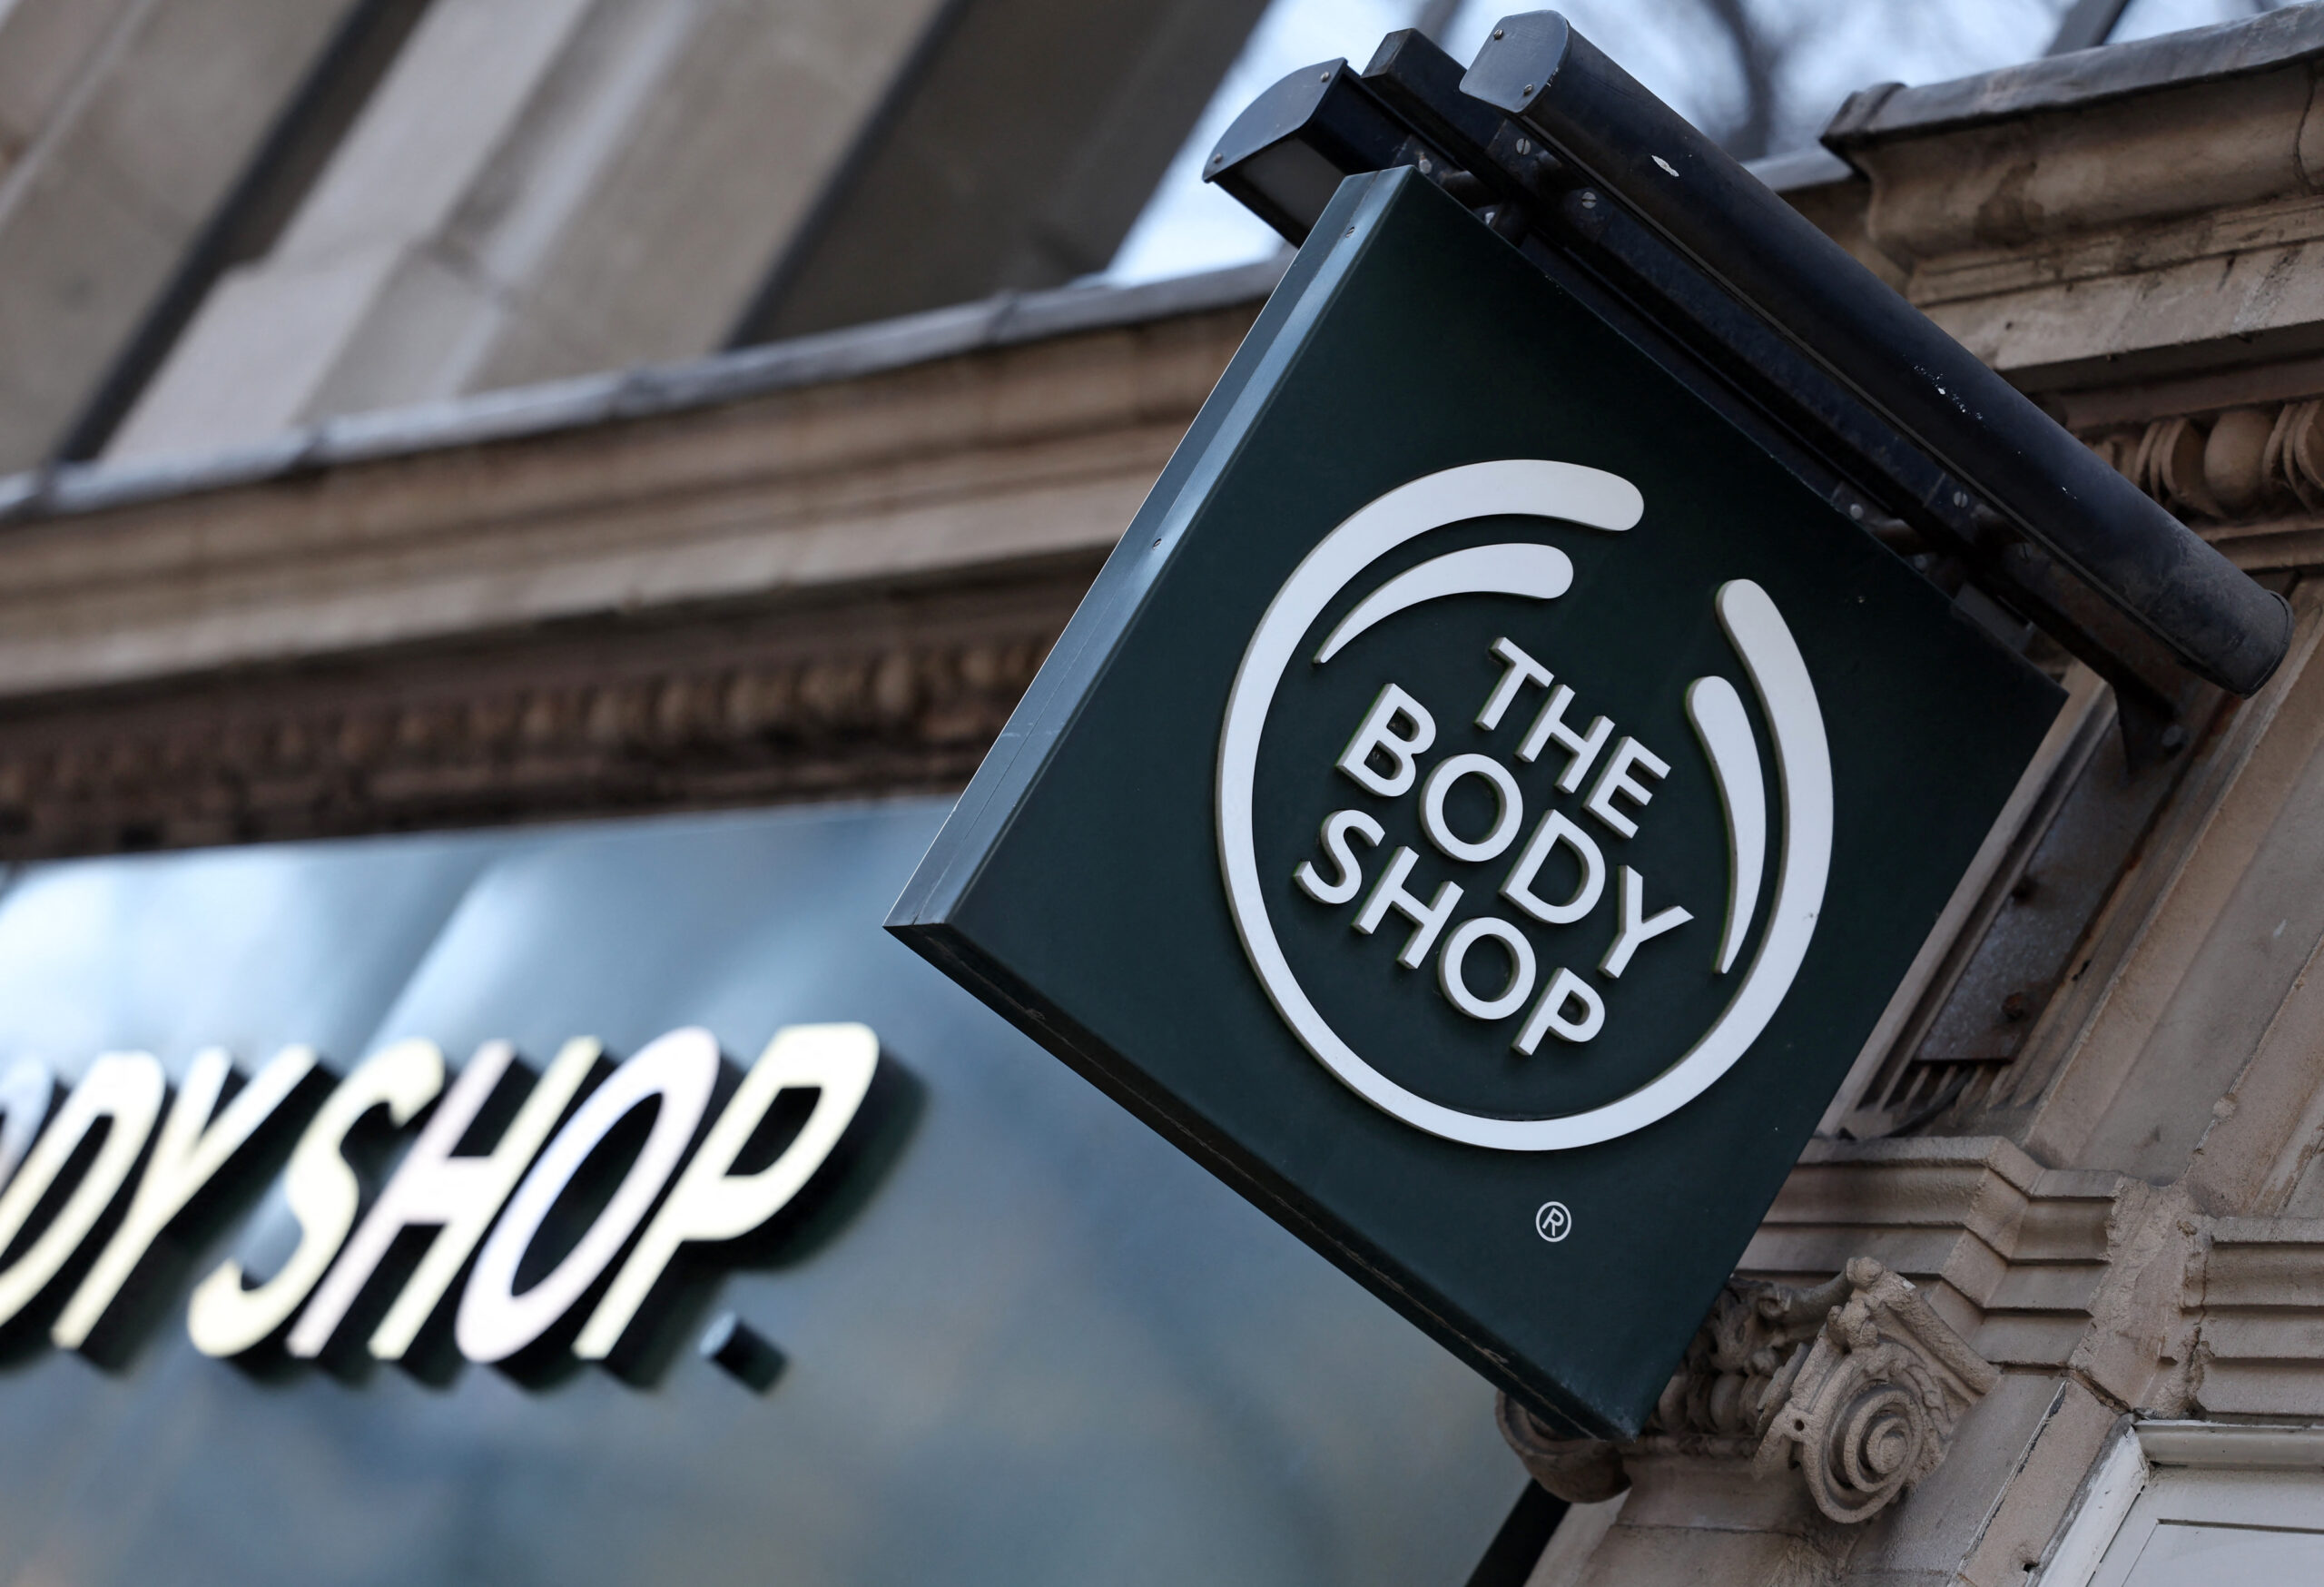 The Body Shop: Σε καθεστώς διαχείρισης η εταιρεία καλλυντικών στη Βρετανία